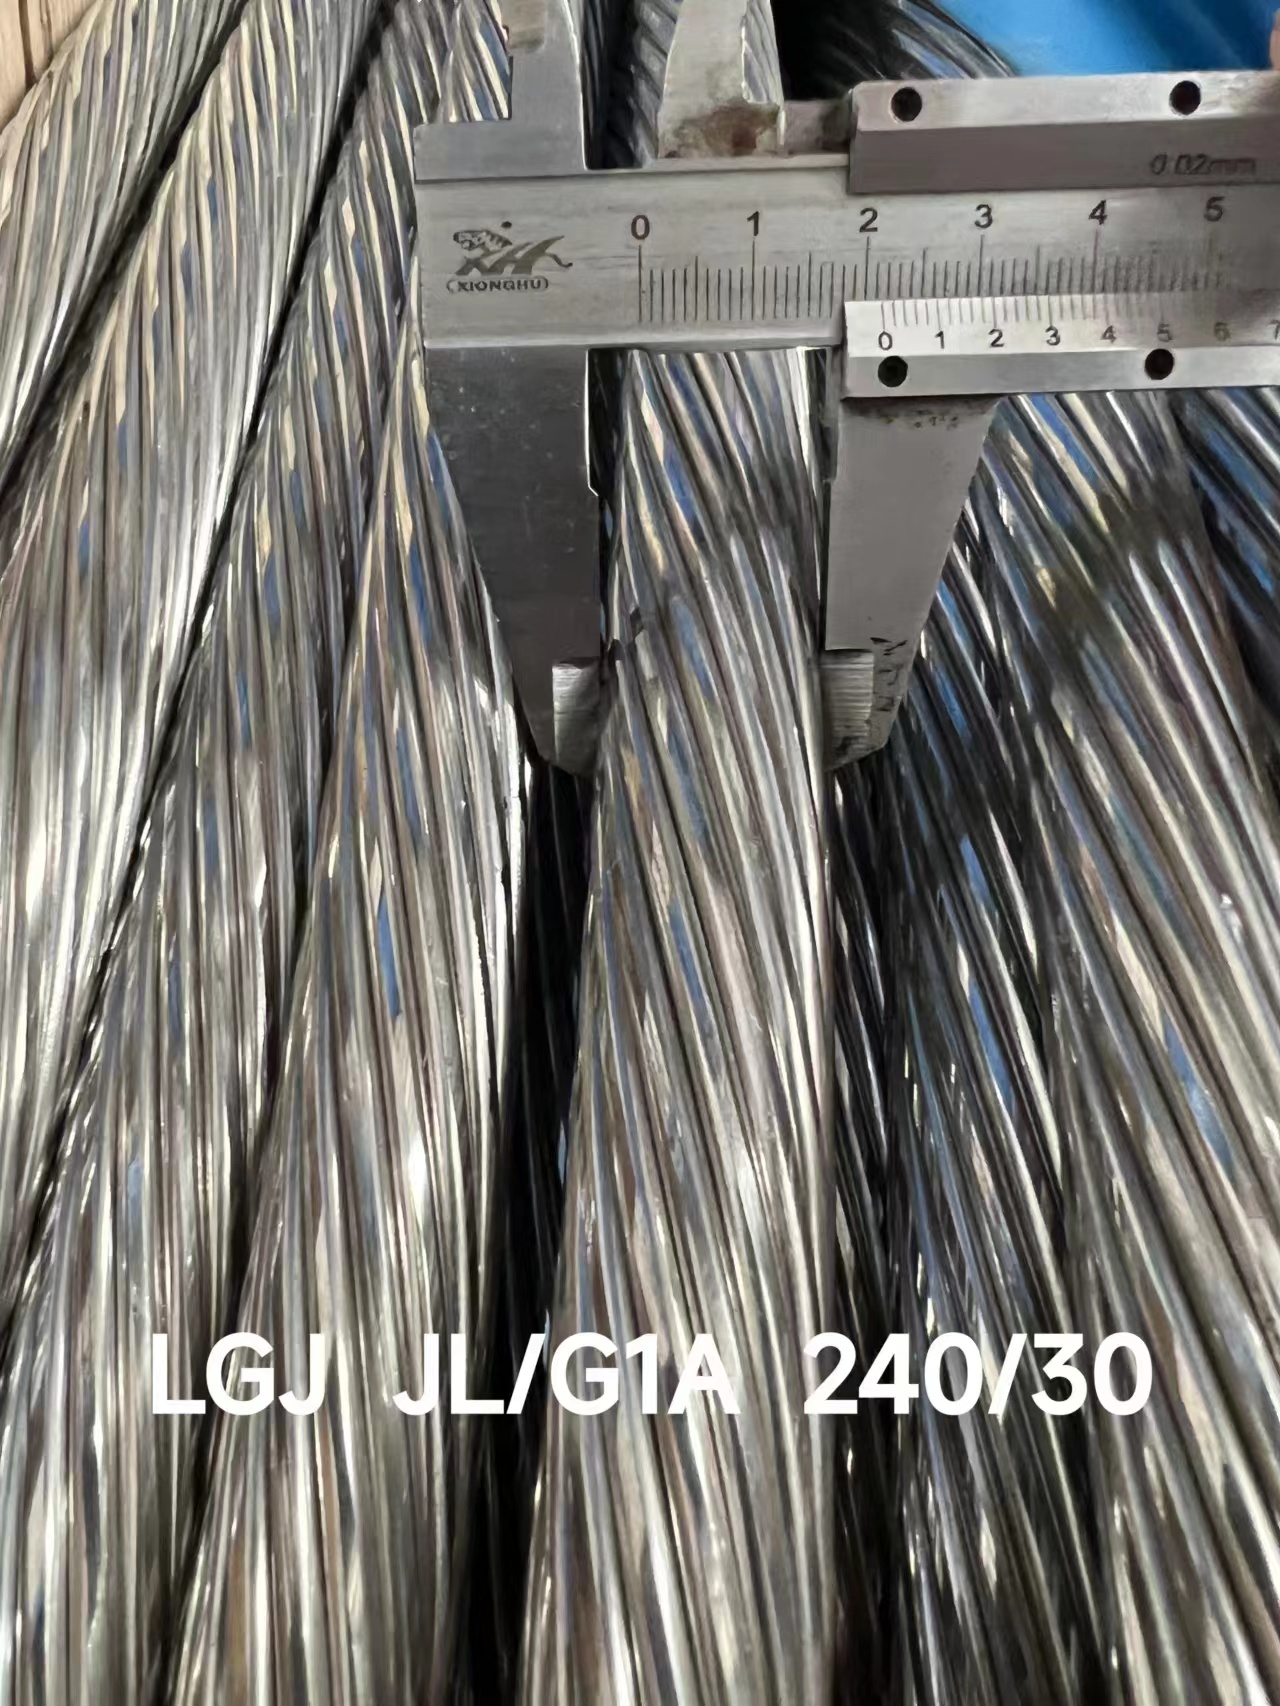 广星LGJ JL/G1A 240/30电力电缆